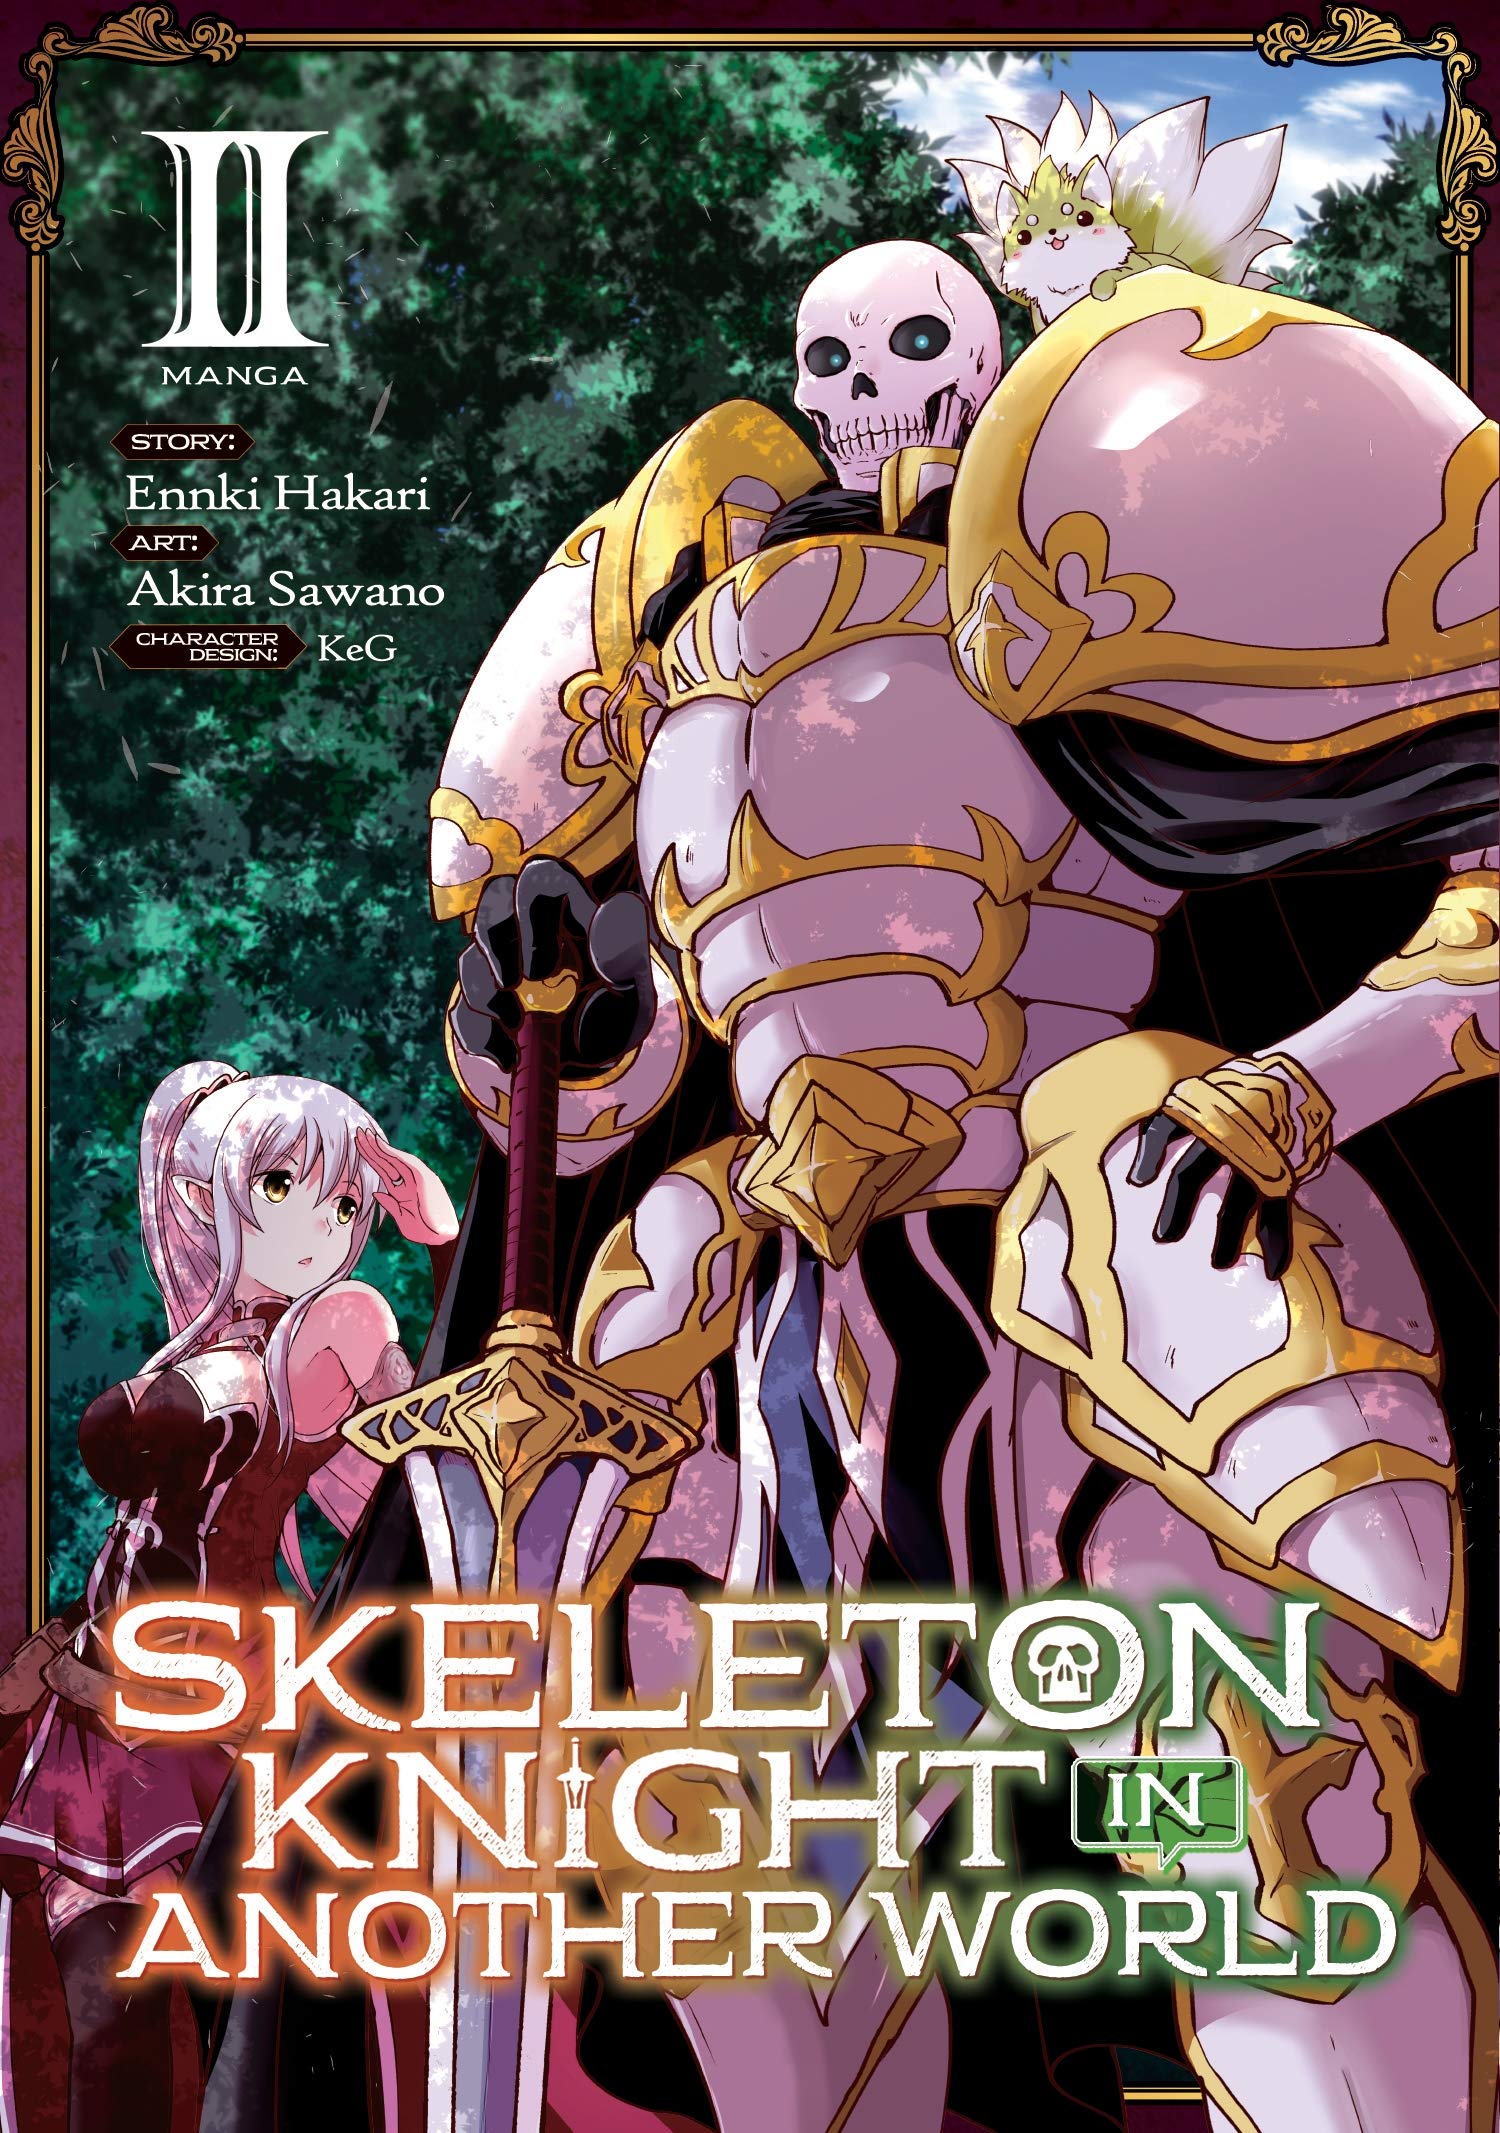 Amazon.com: Skeleton Knight in Another World (Manga) Vol. 2 ...